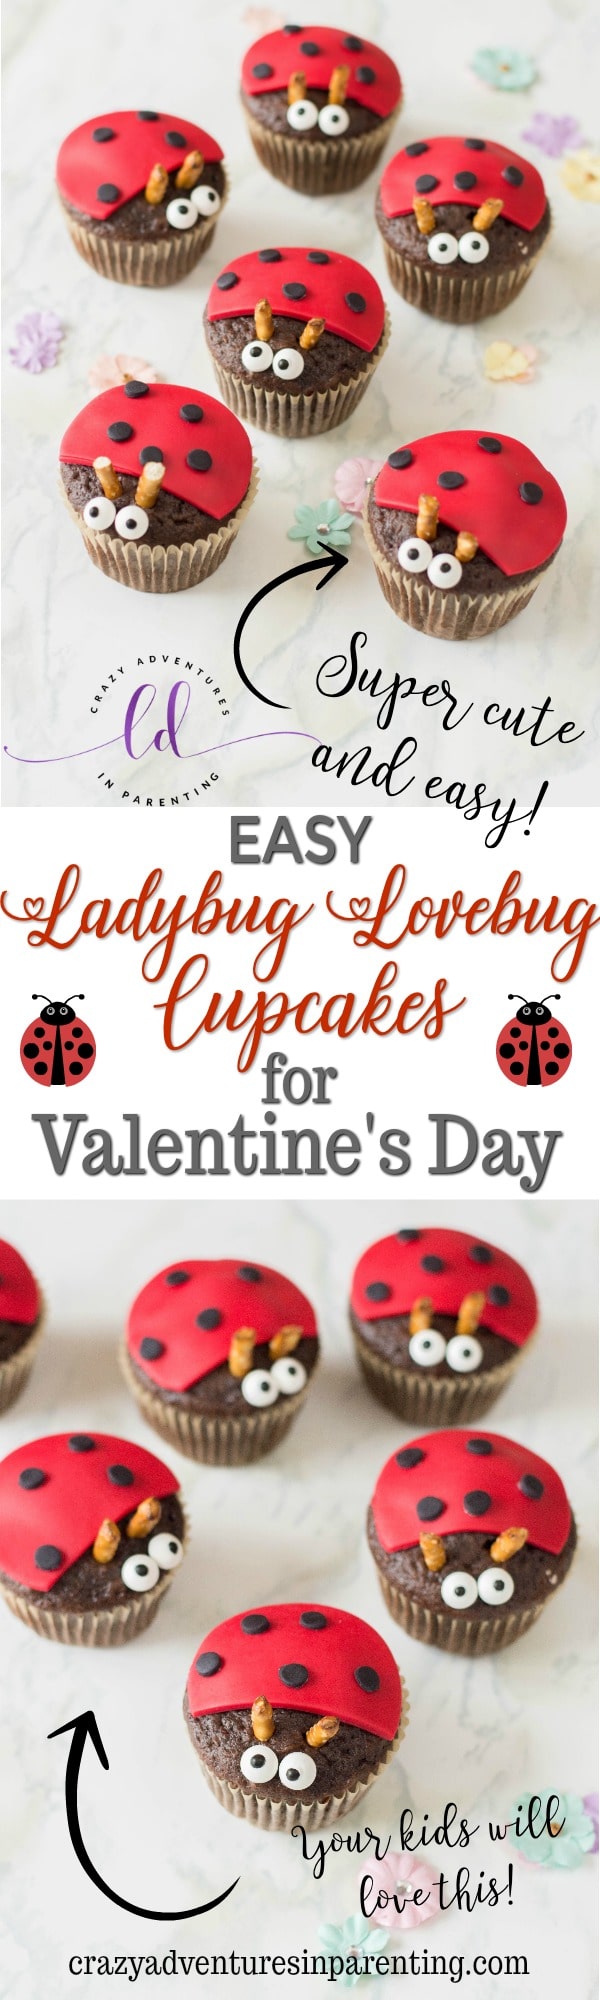 Easy Ladybug Lovebug Cupcakes for Valentine's Day